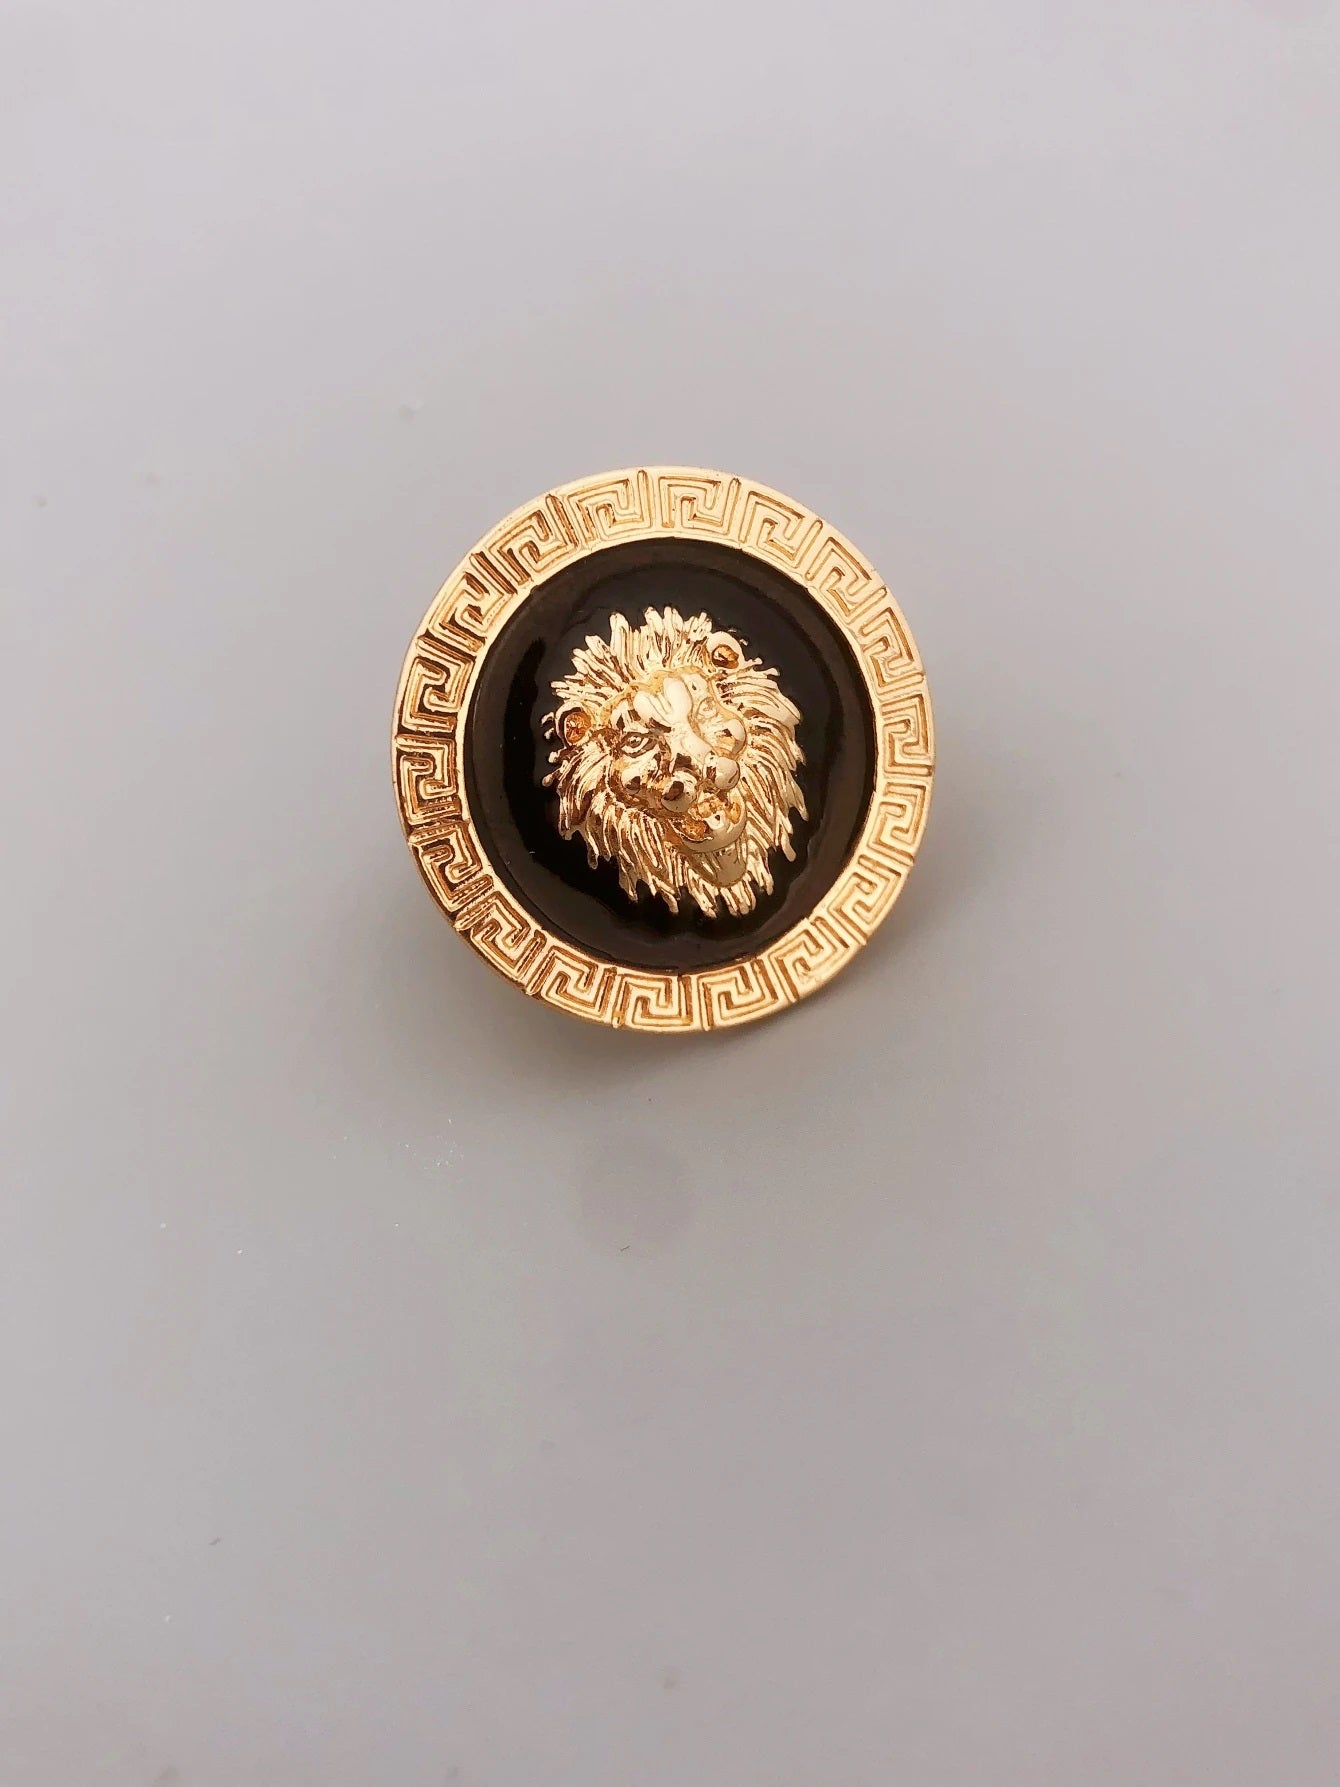 ALDO Jewelry Golden Adjustable Lione Head Ring